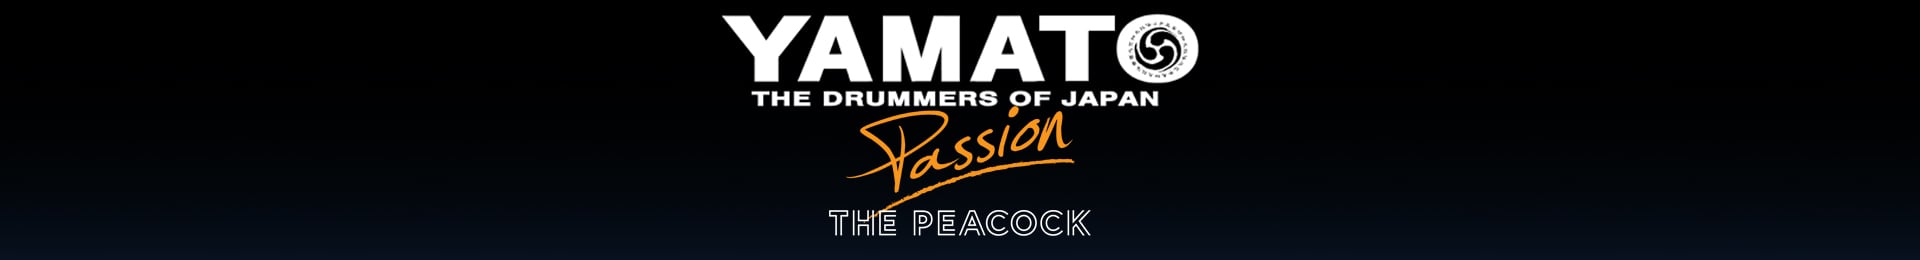 Yamato: Passion banner image